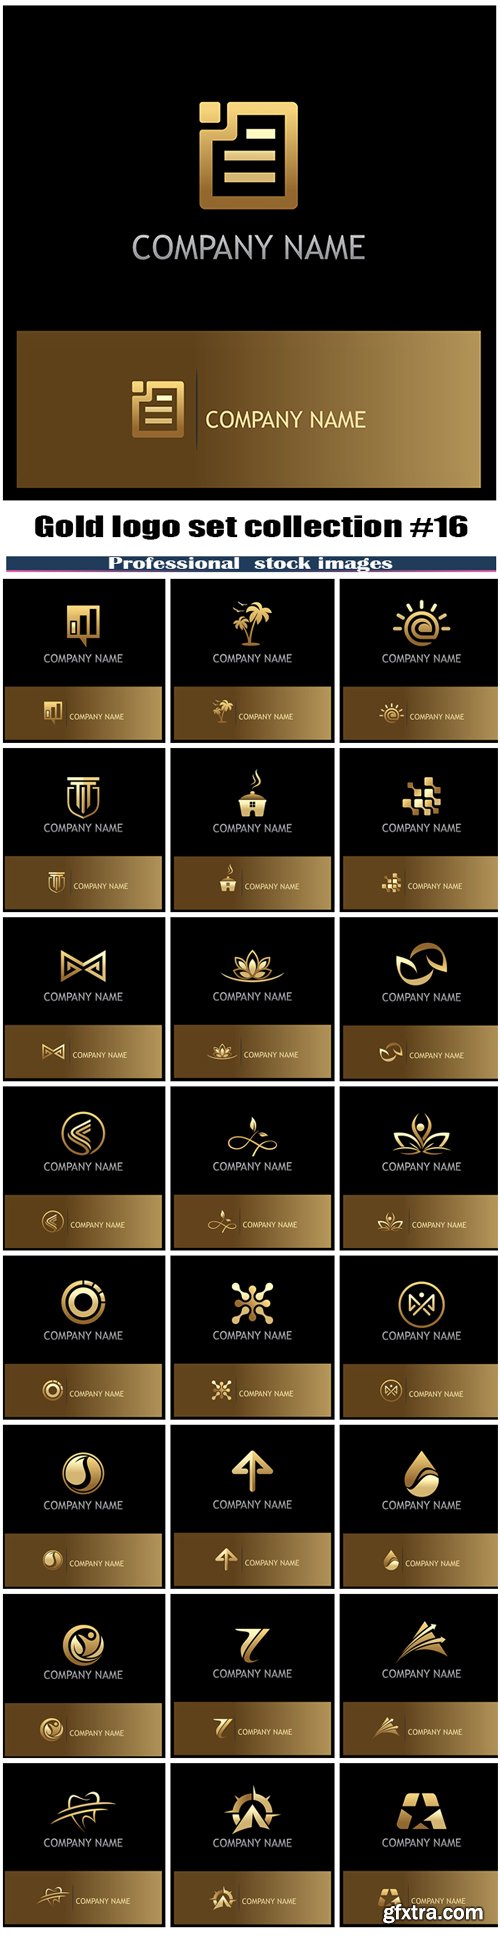 Gold logo set collection #16